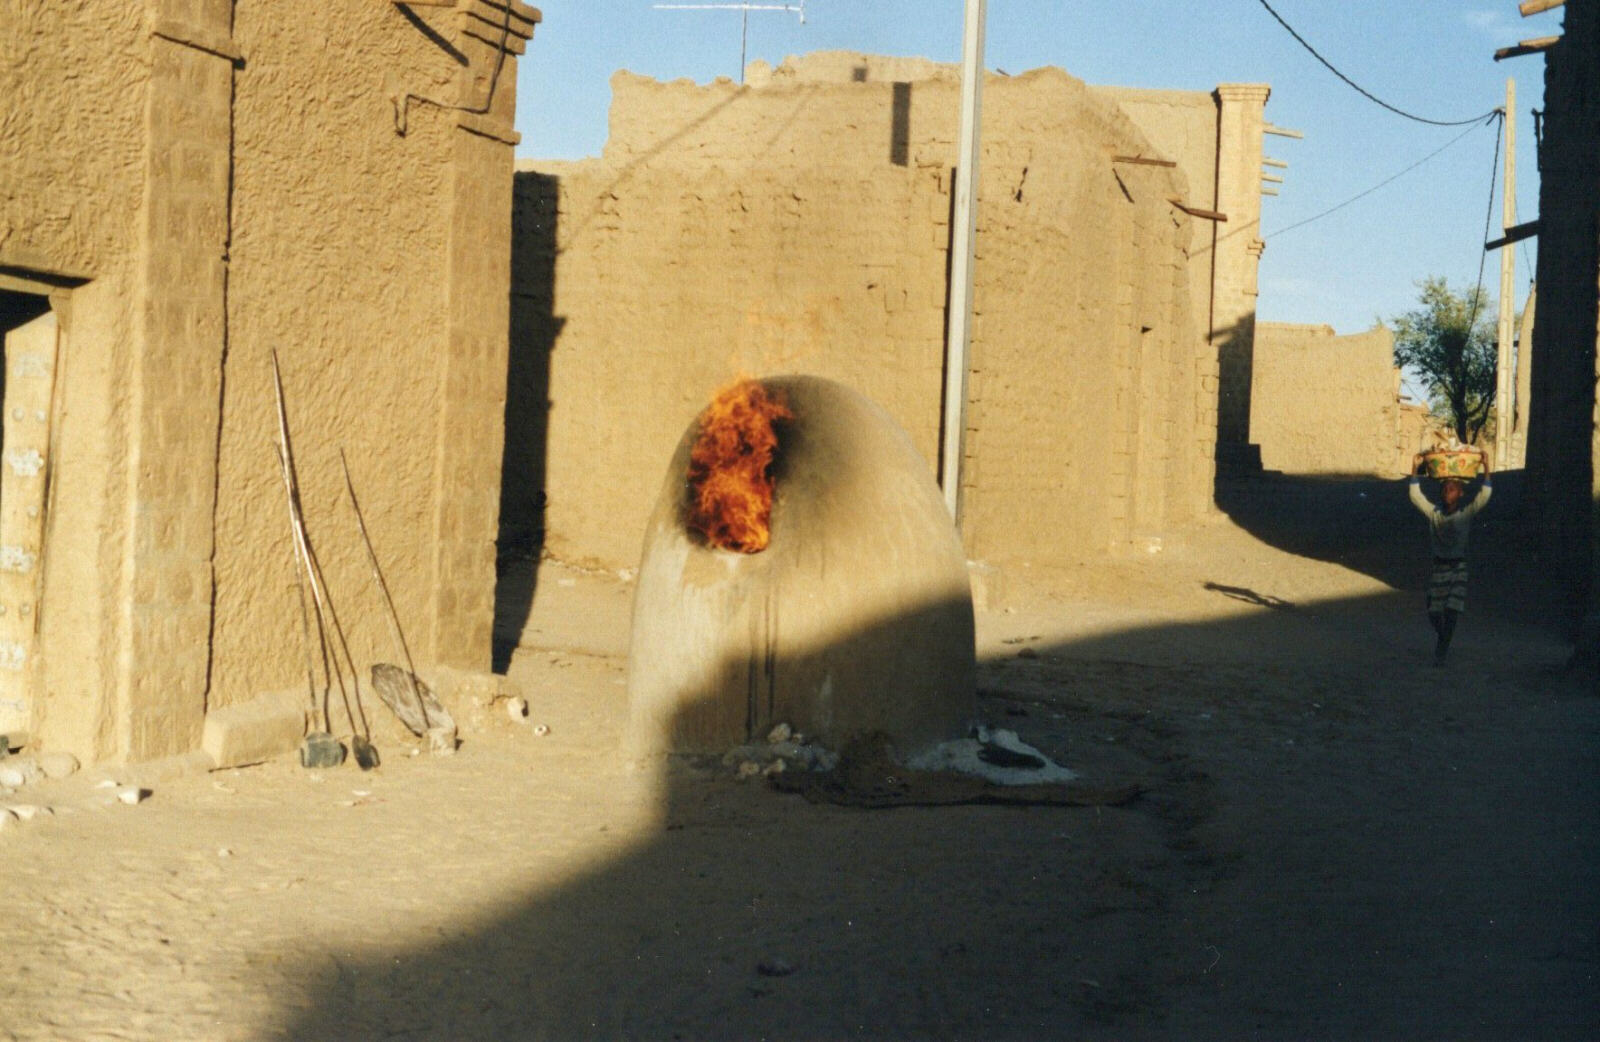 A bread oven in a street in Timbuktu